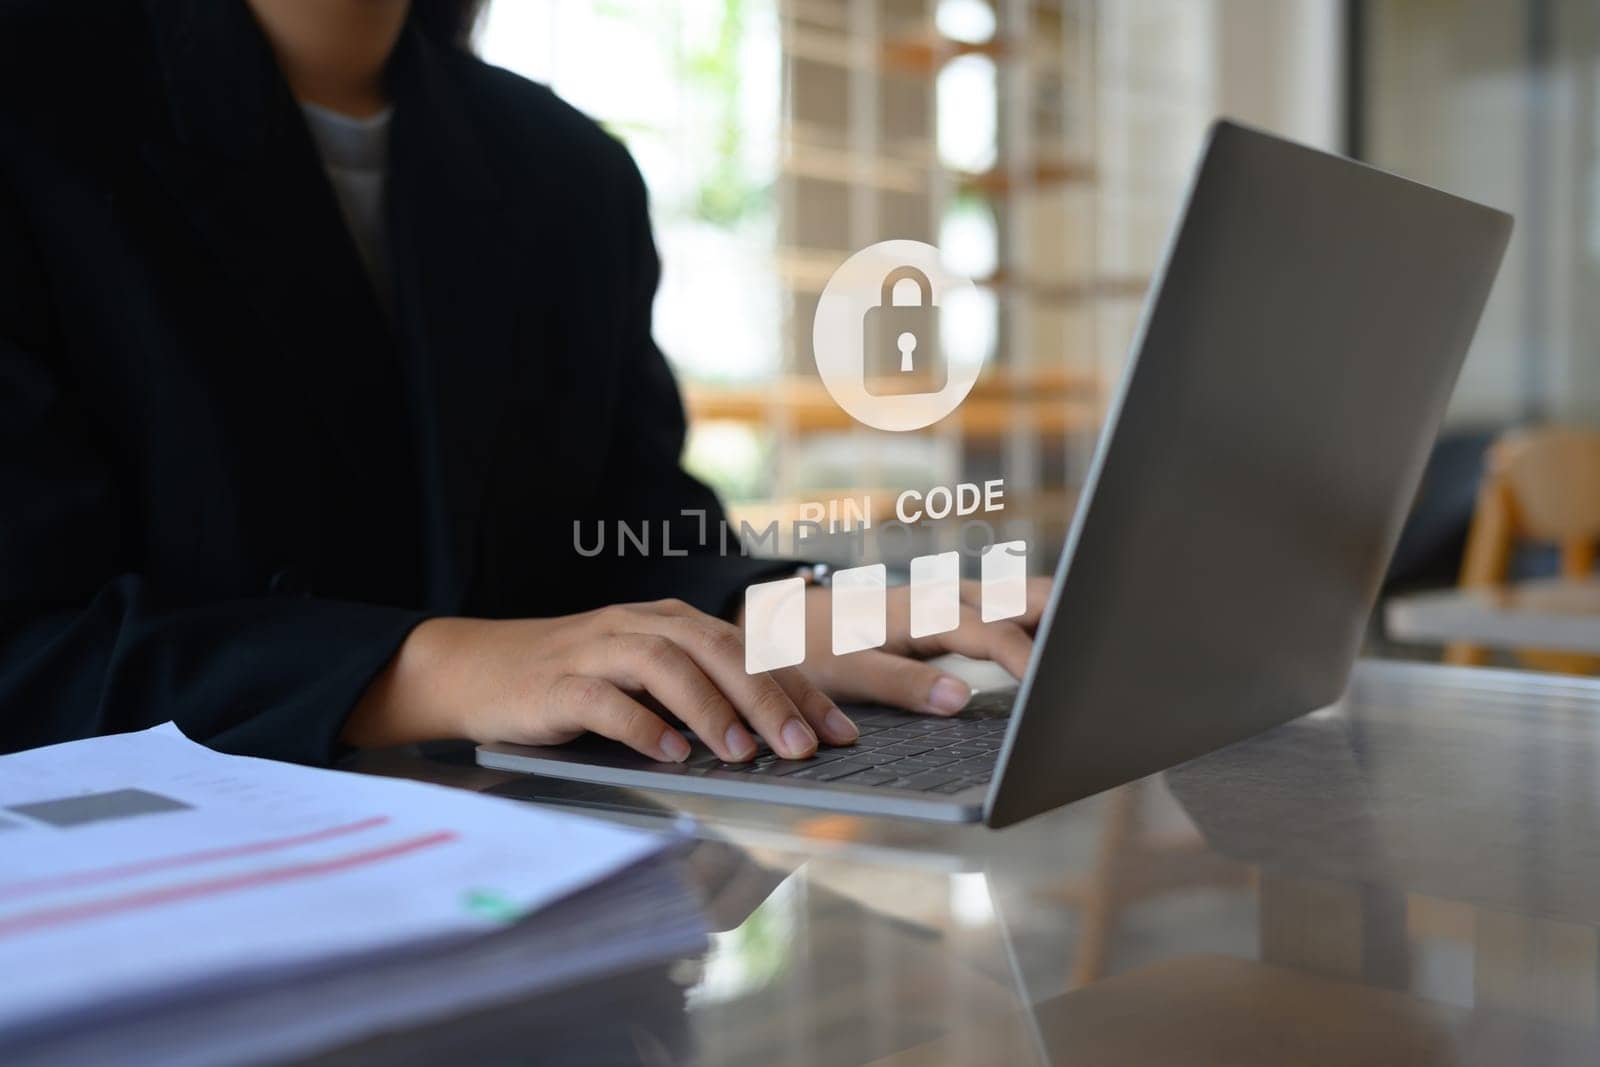 Businesswoman in black suit hands entering pin code on laptop. Cybersecurity concept by prathanchorruangsak